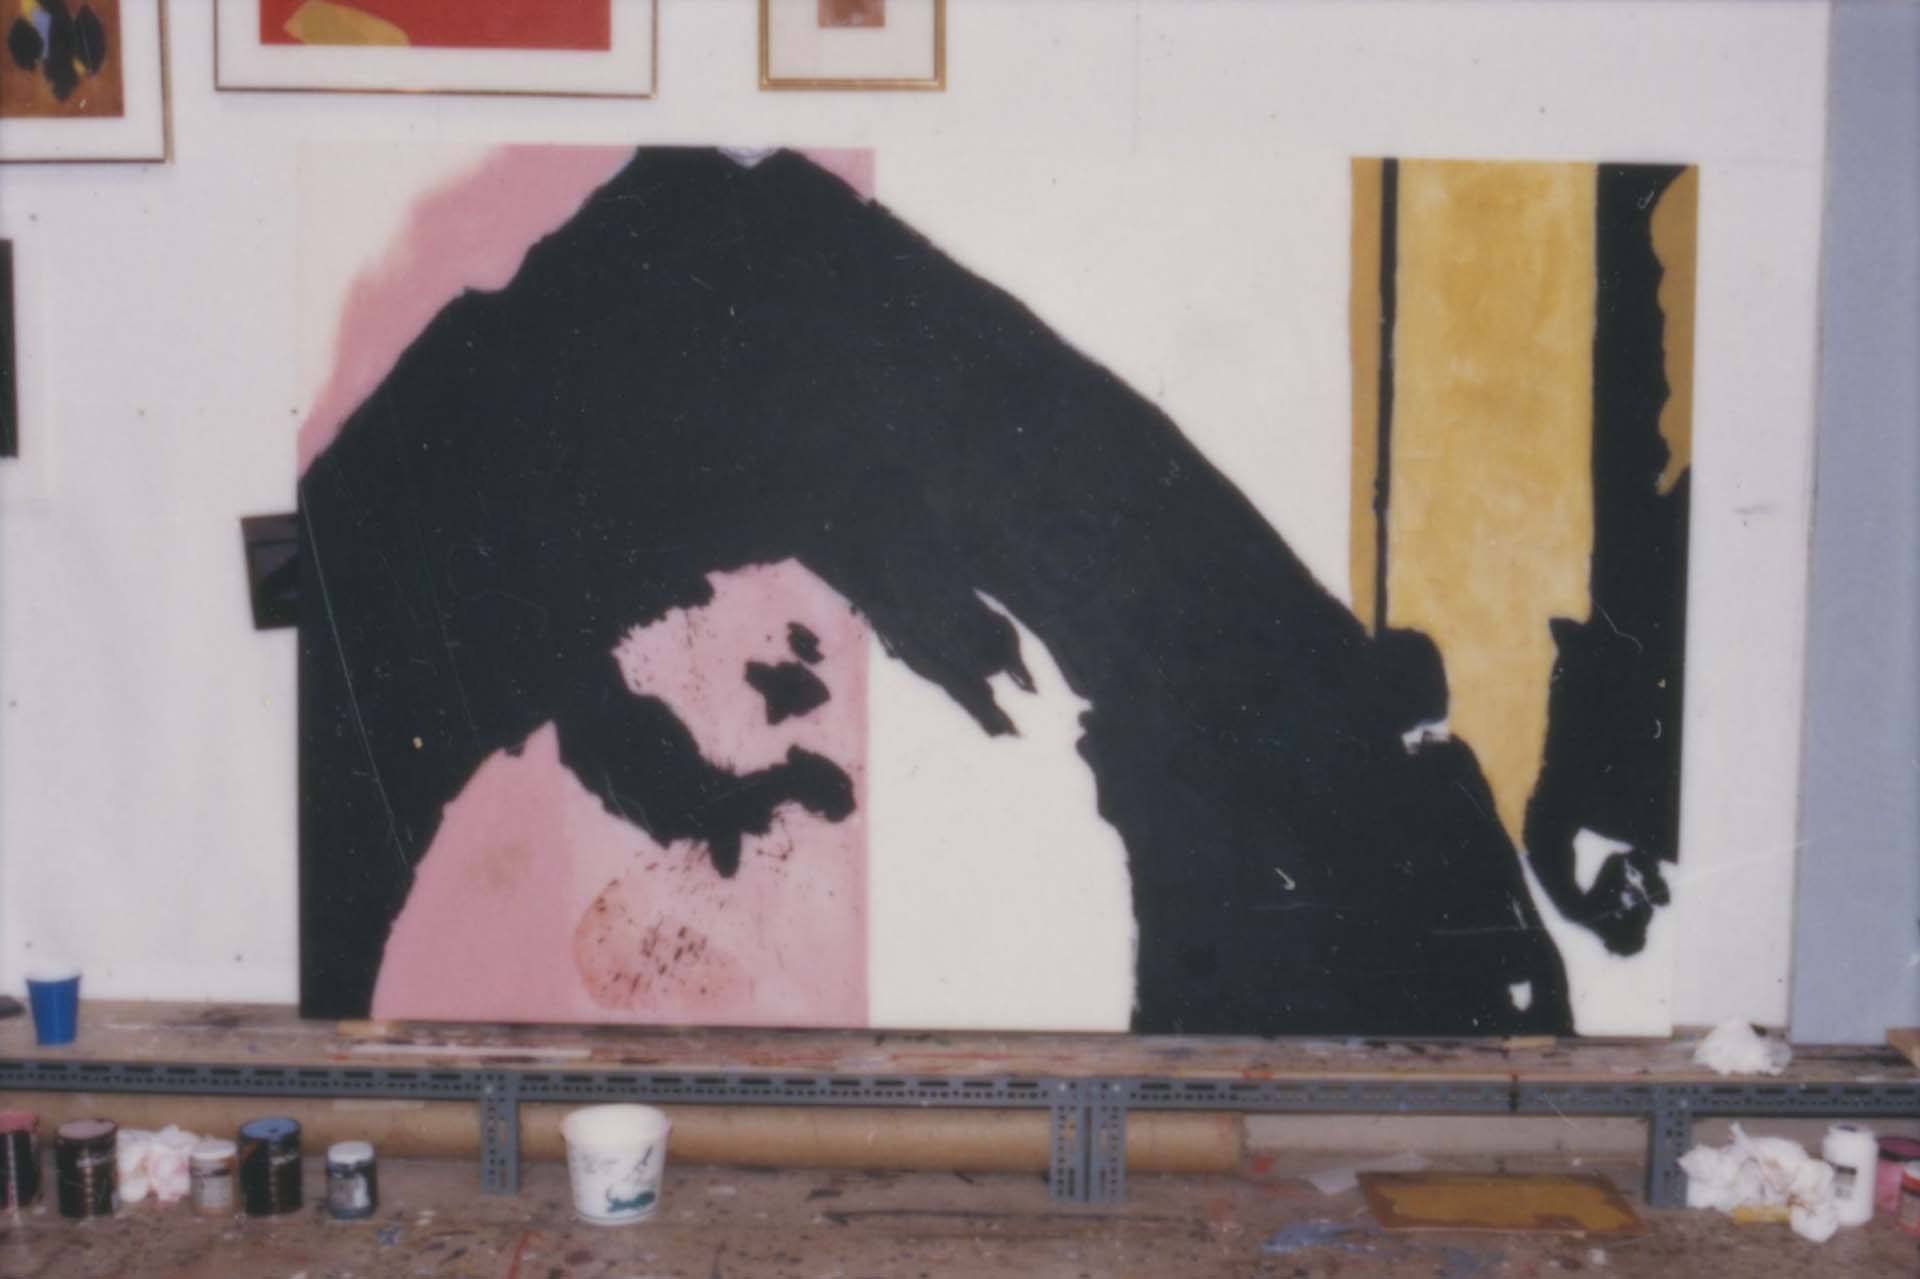 Either/Or (For Kierkegaard) in progress in Motherwell’s Greenwich studio, 1990